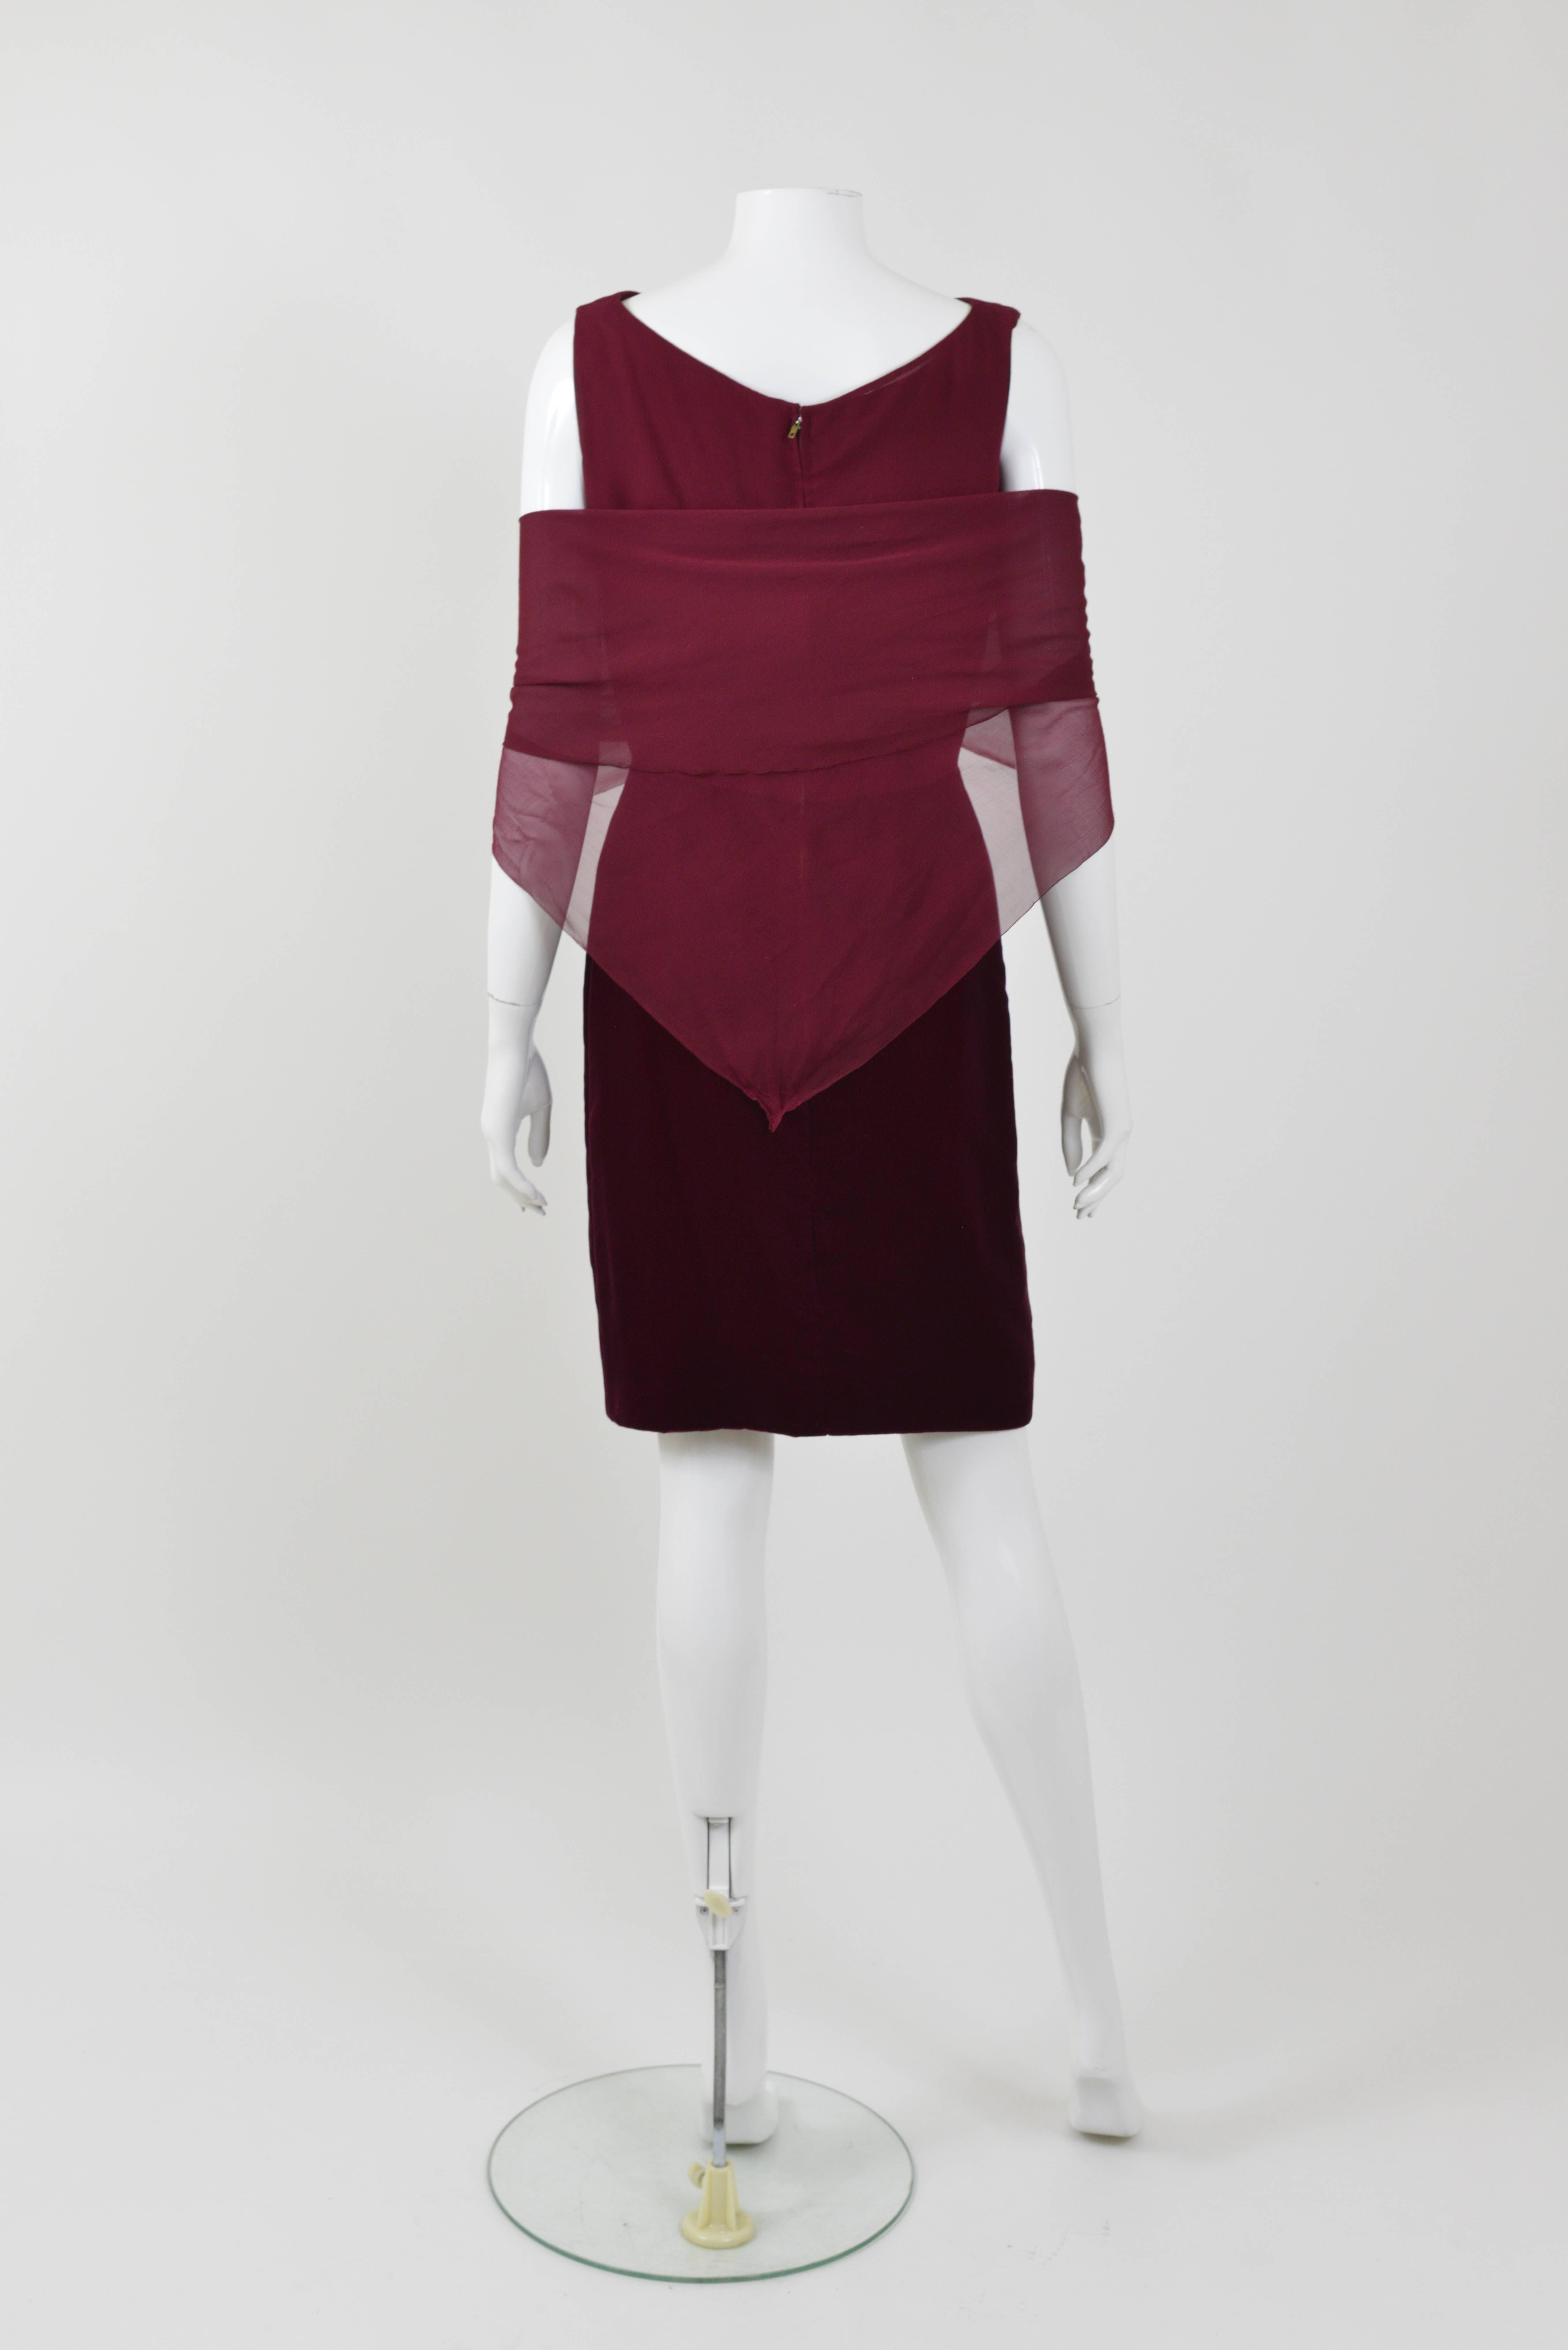 1960s CURIEL Italian Couture Burgundy Velvet Cocktail Dress with Bolero  2